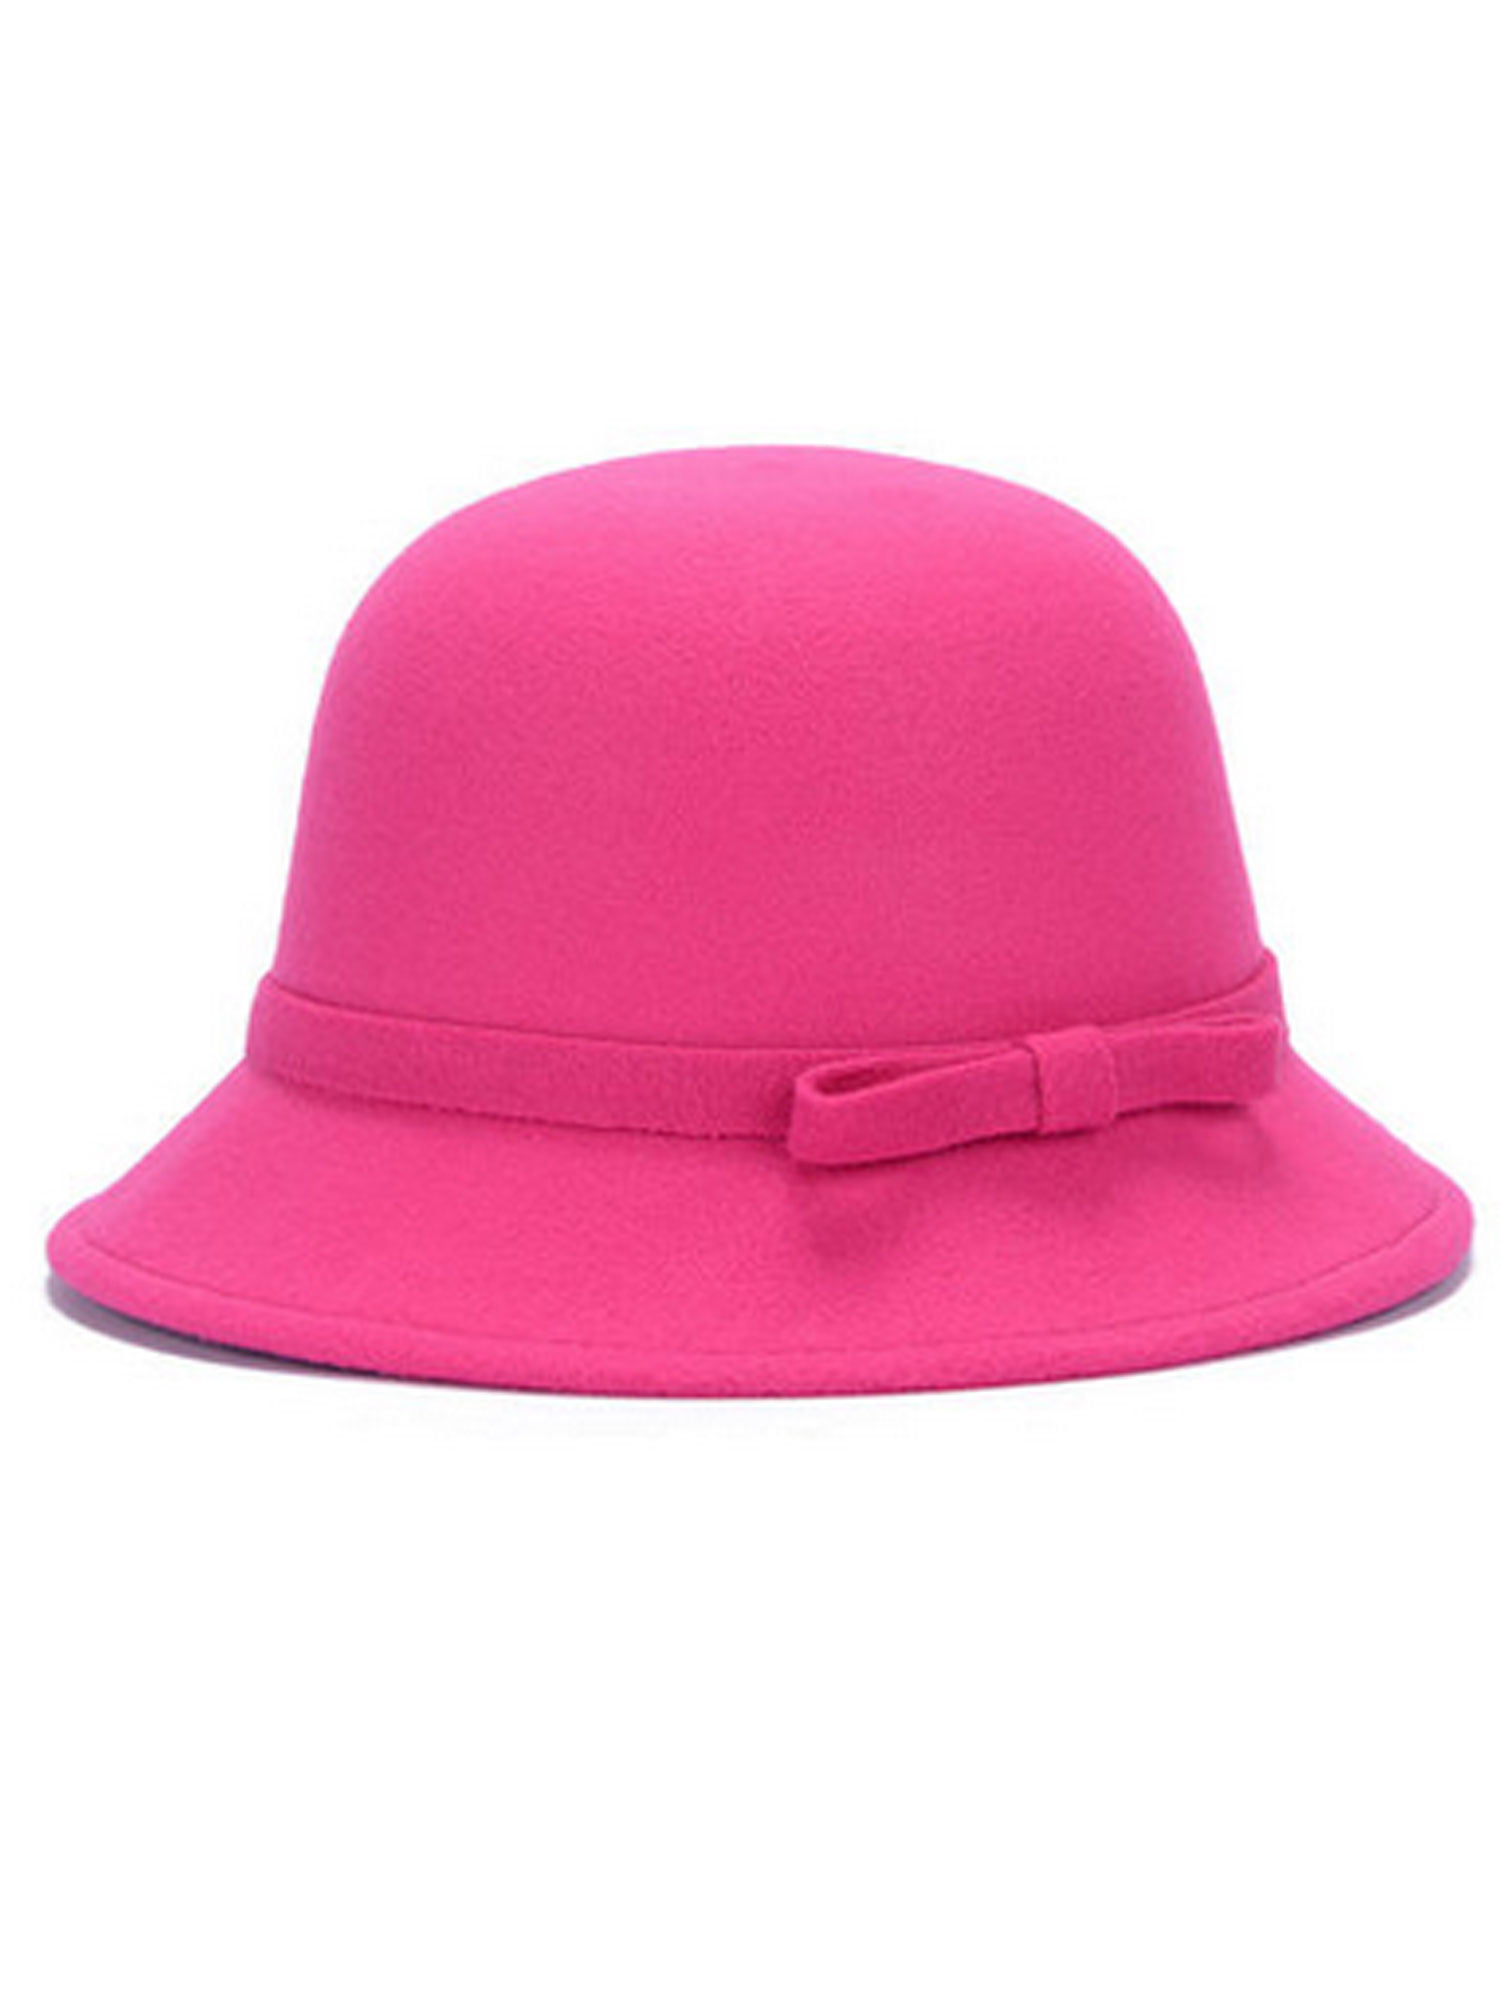 Women Warm Bowler Cap Winter Vintage Elegant Wool Flower Felt Hat Bucket Hat Flower Felt Cap Cloche Hat